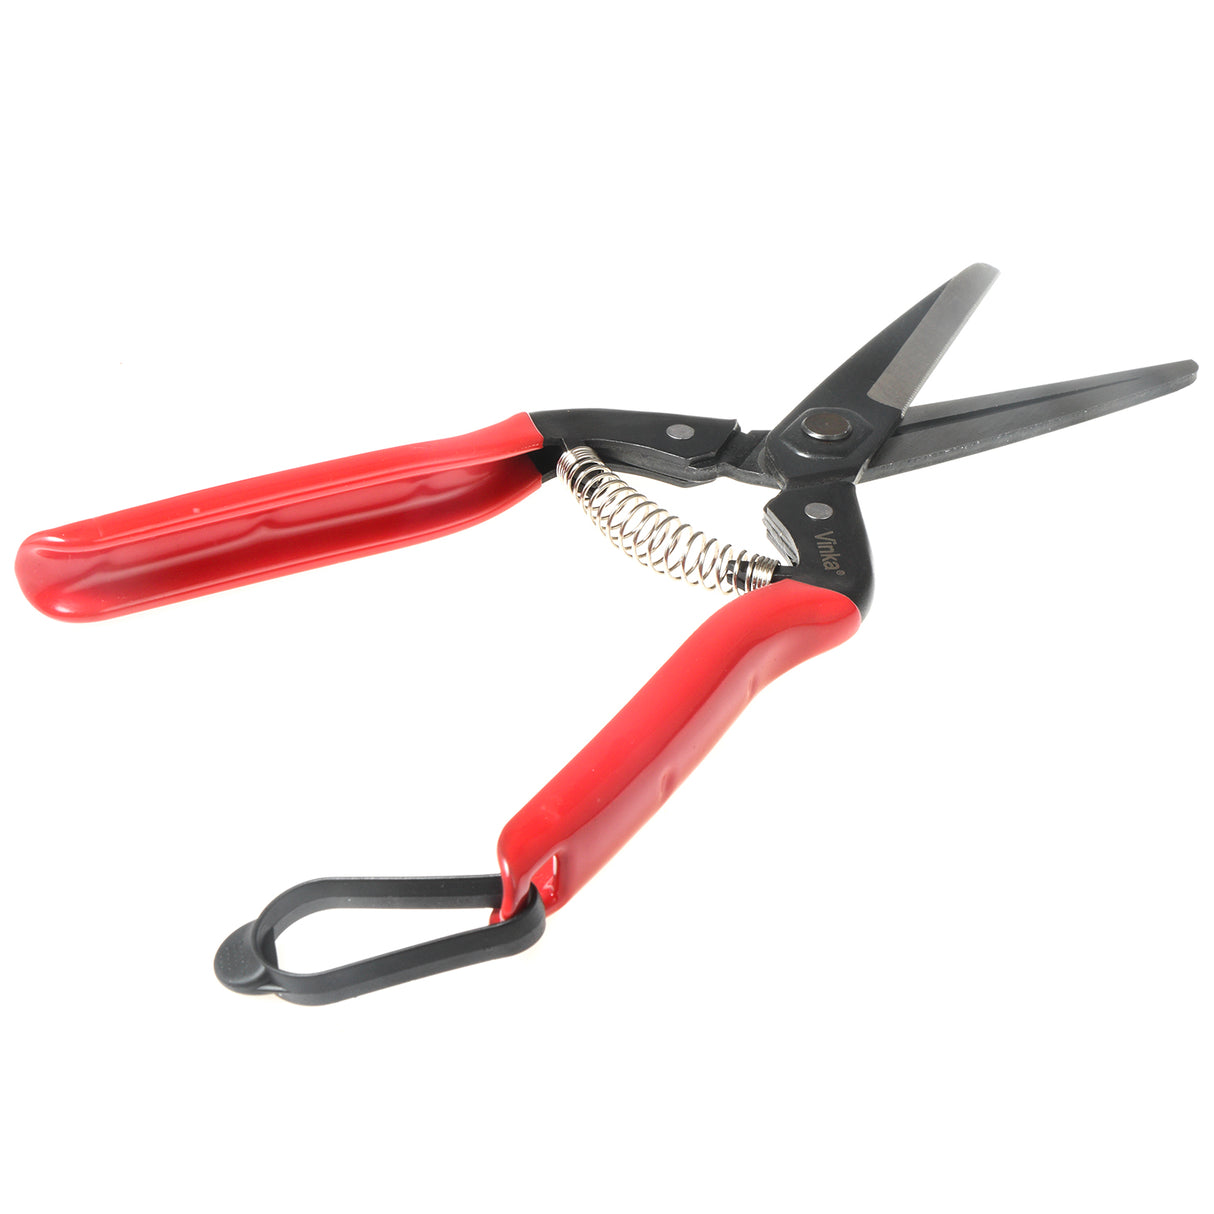 VAPS 030, Long Blade Steel Fruit & Flower Cutter, cuts plant stems upto 10mm, Best Garden Scissor